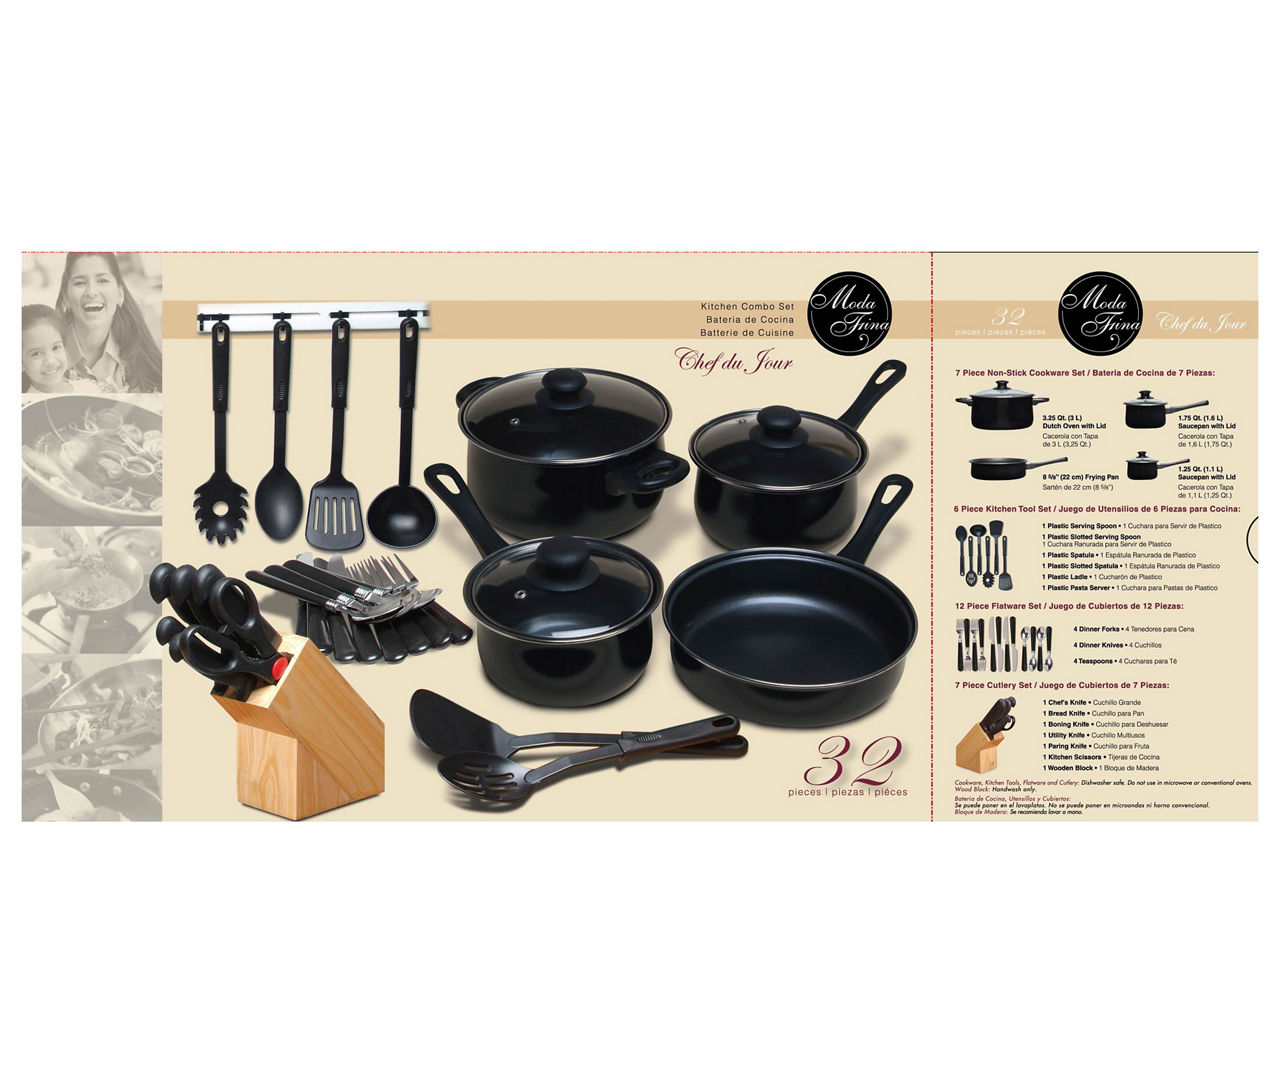 Gibson Home 95-Piece Complete Kitchen Starter Kit - Black